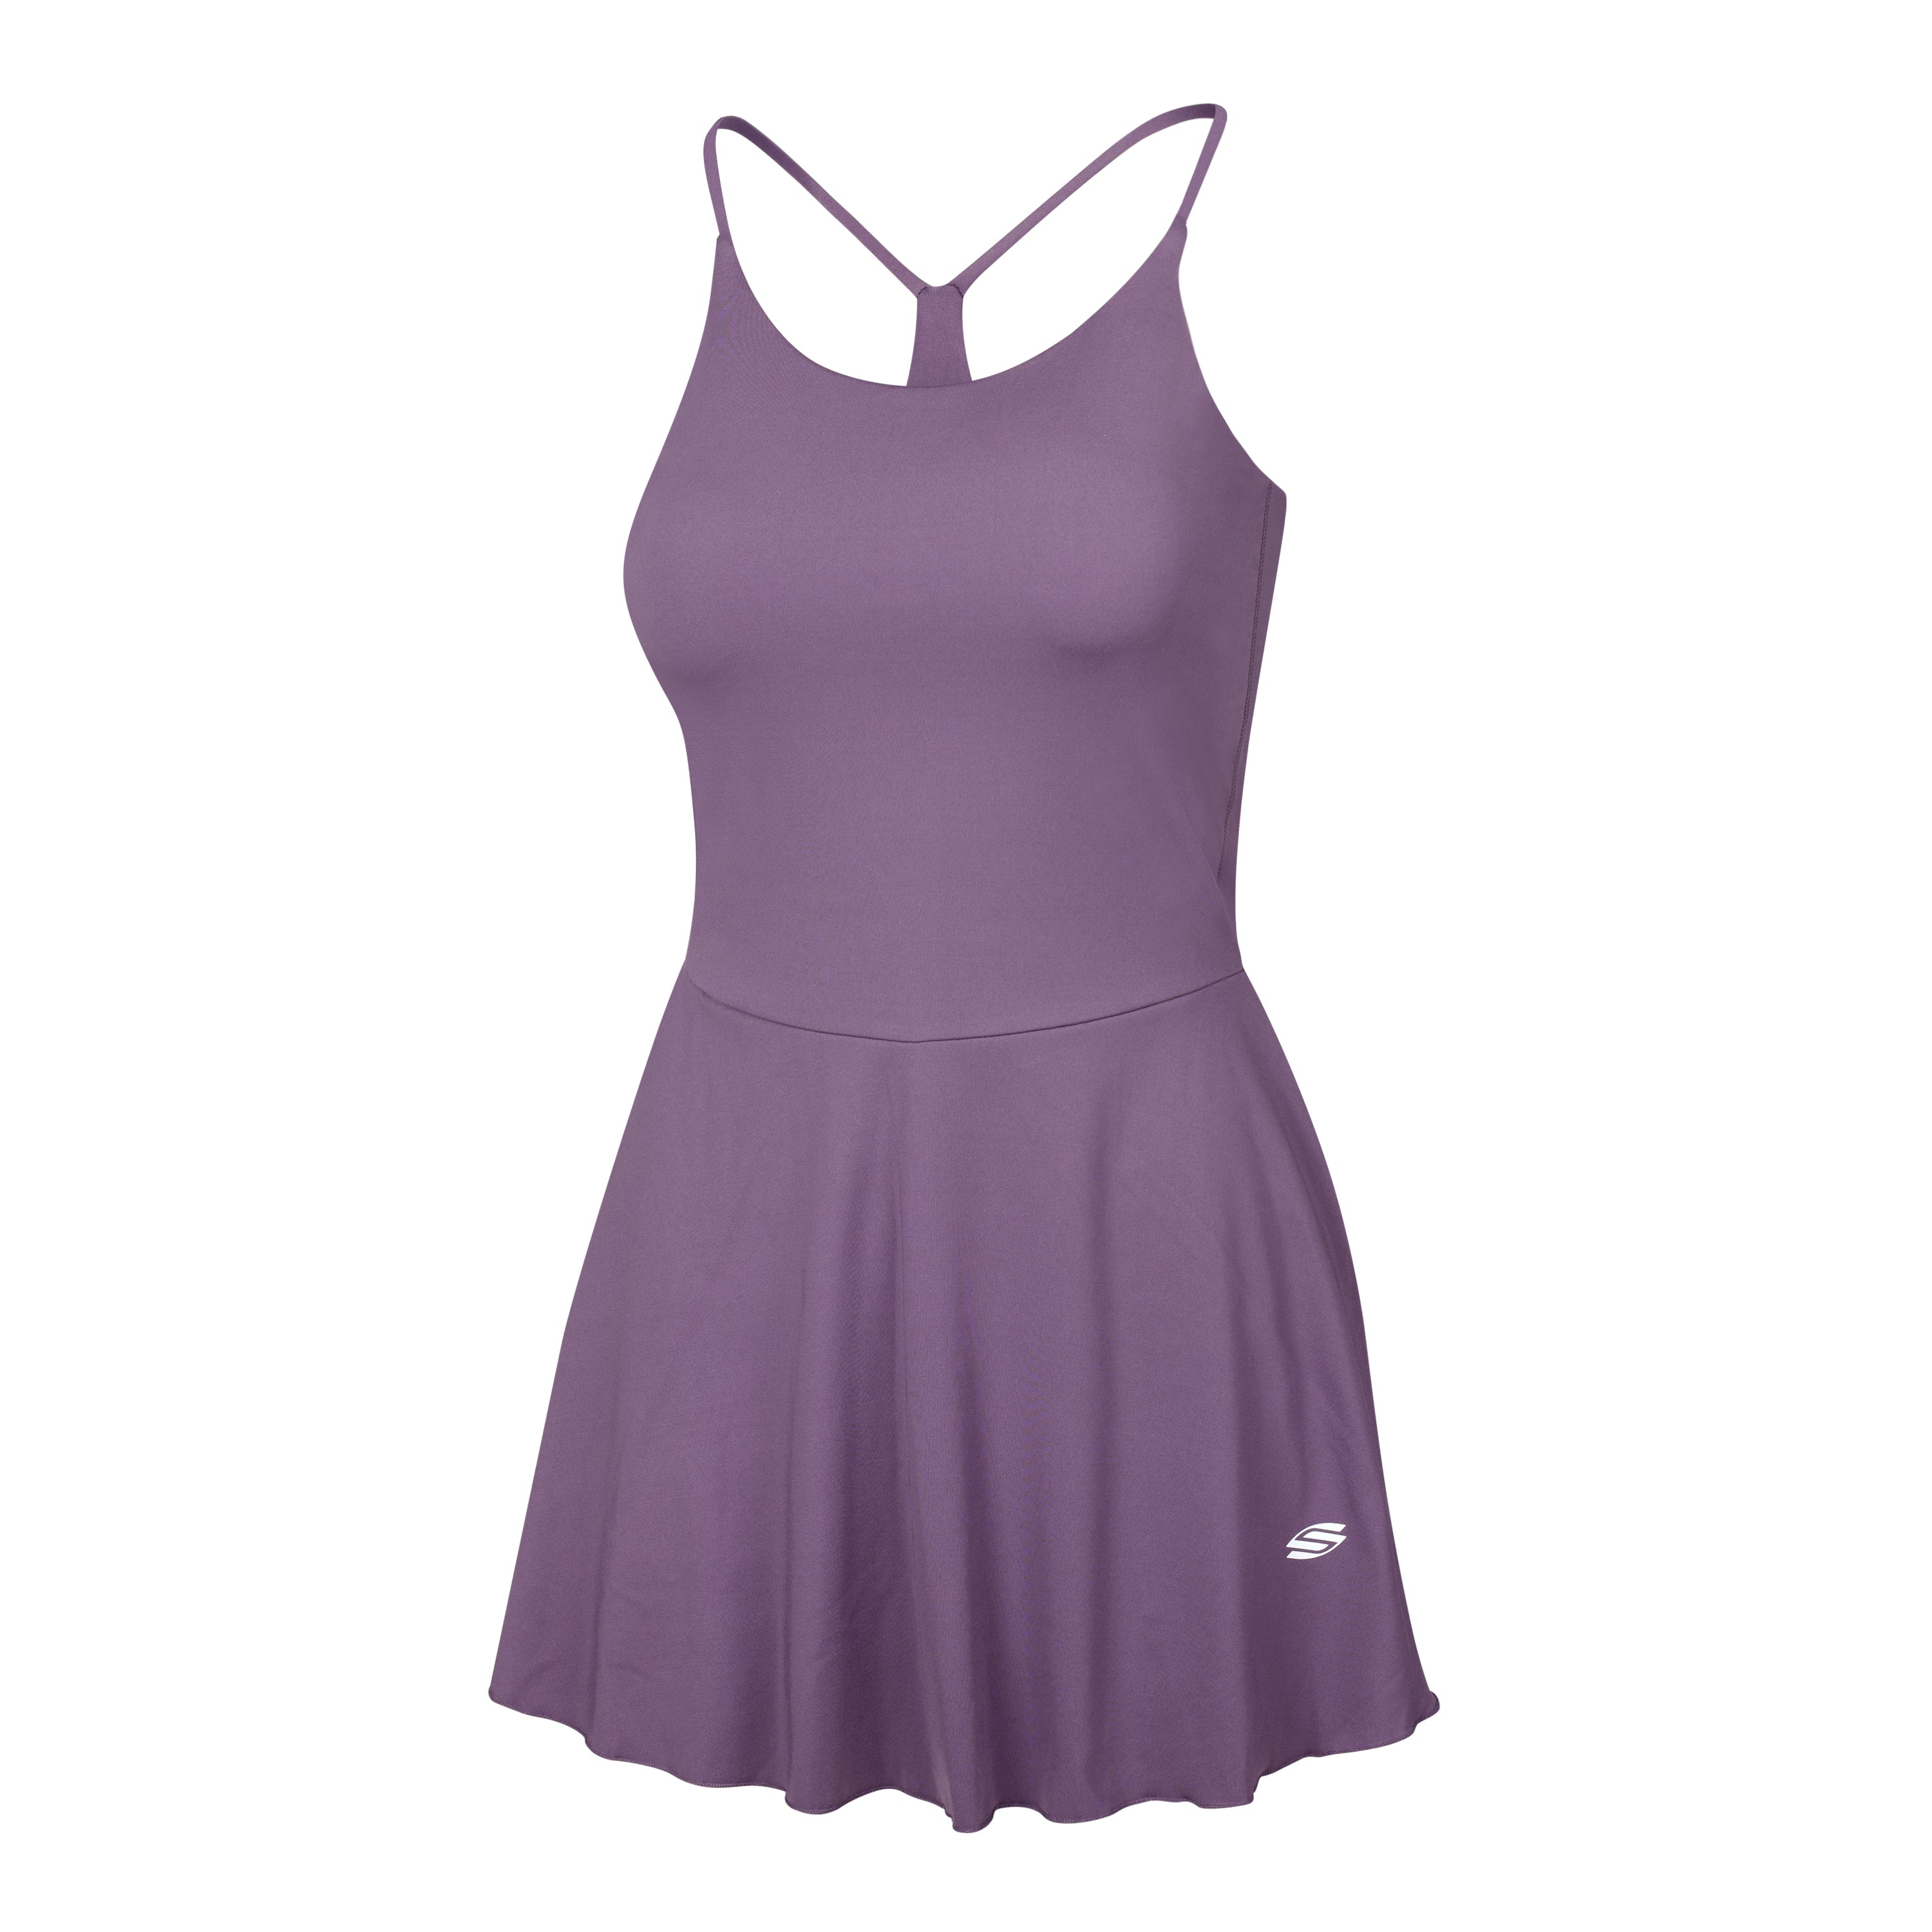 Purple Blossom AvaLee by Selkirk Women's Single-Strap Court Dress